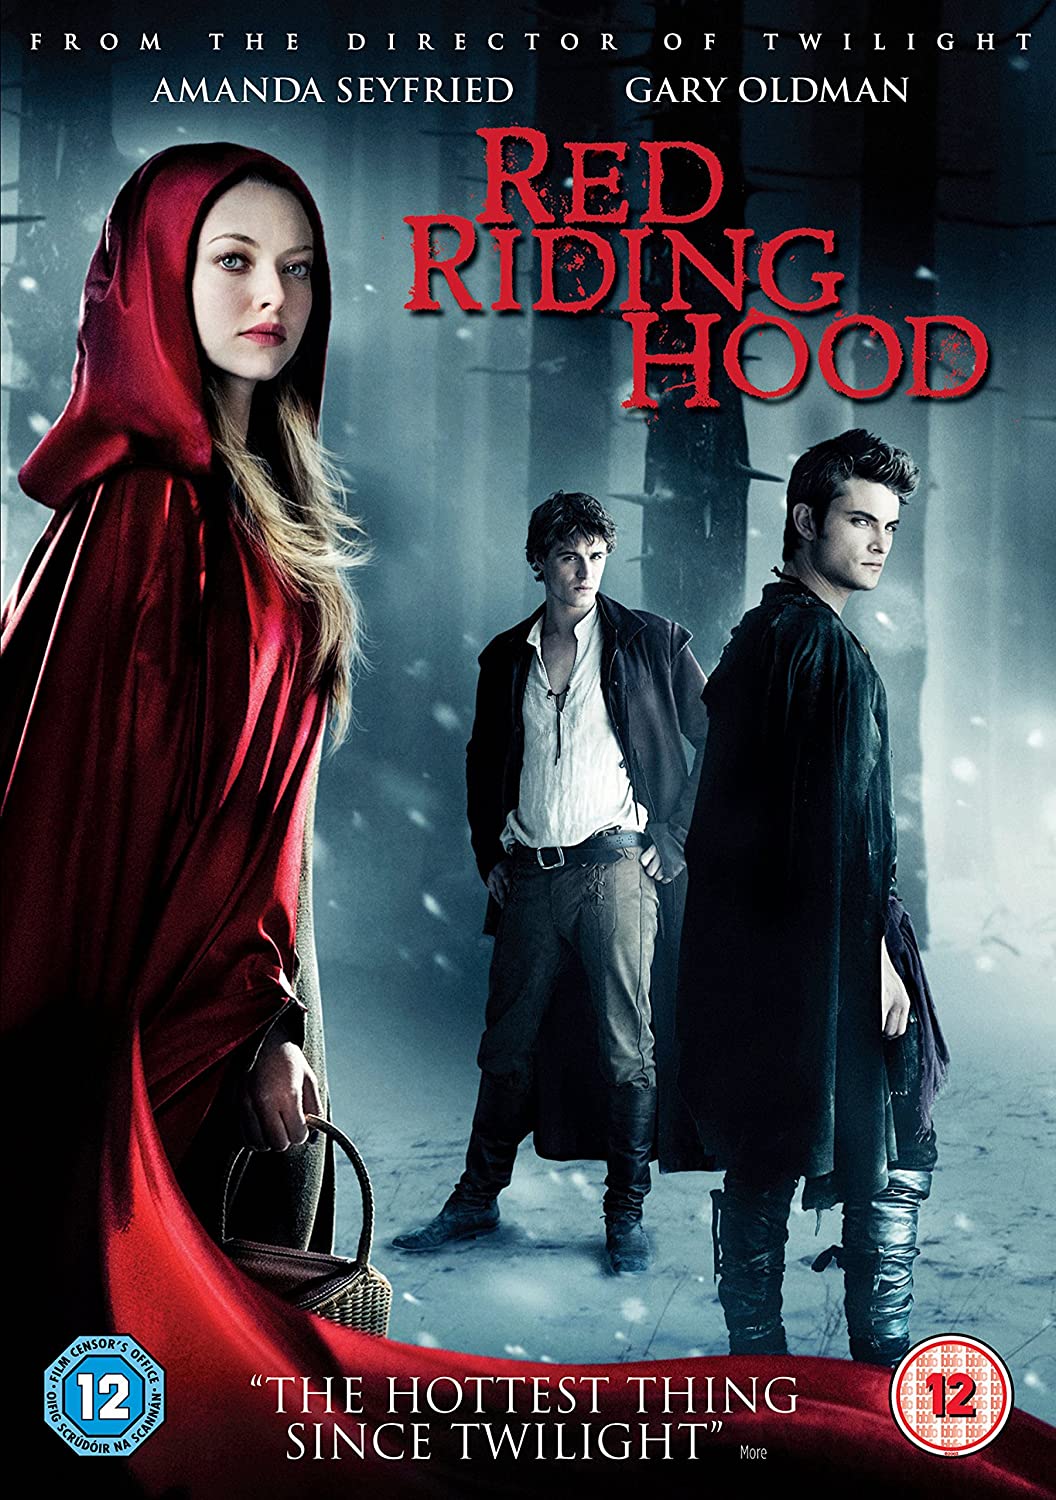 Stiahni si Filmy DVD Cervena Karkulka / Red Riding Hood (2011)(CZ/EN) = CSFD 53%